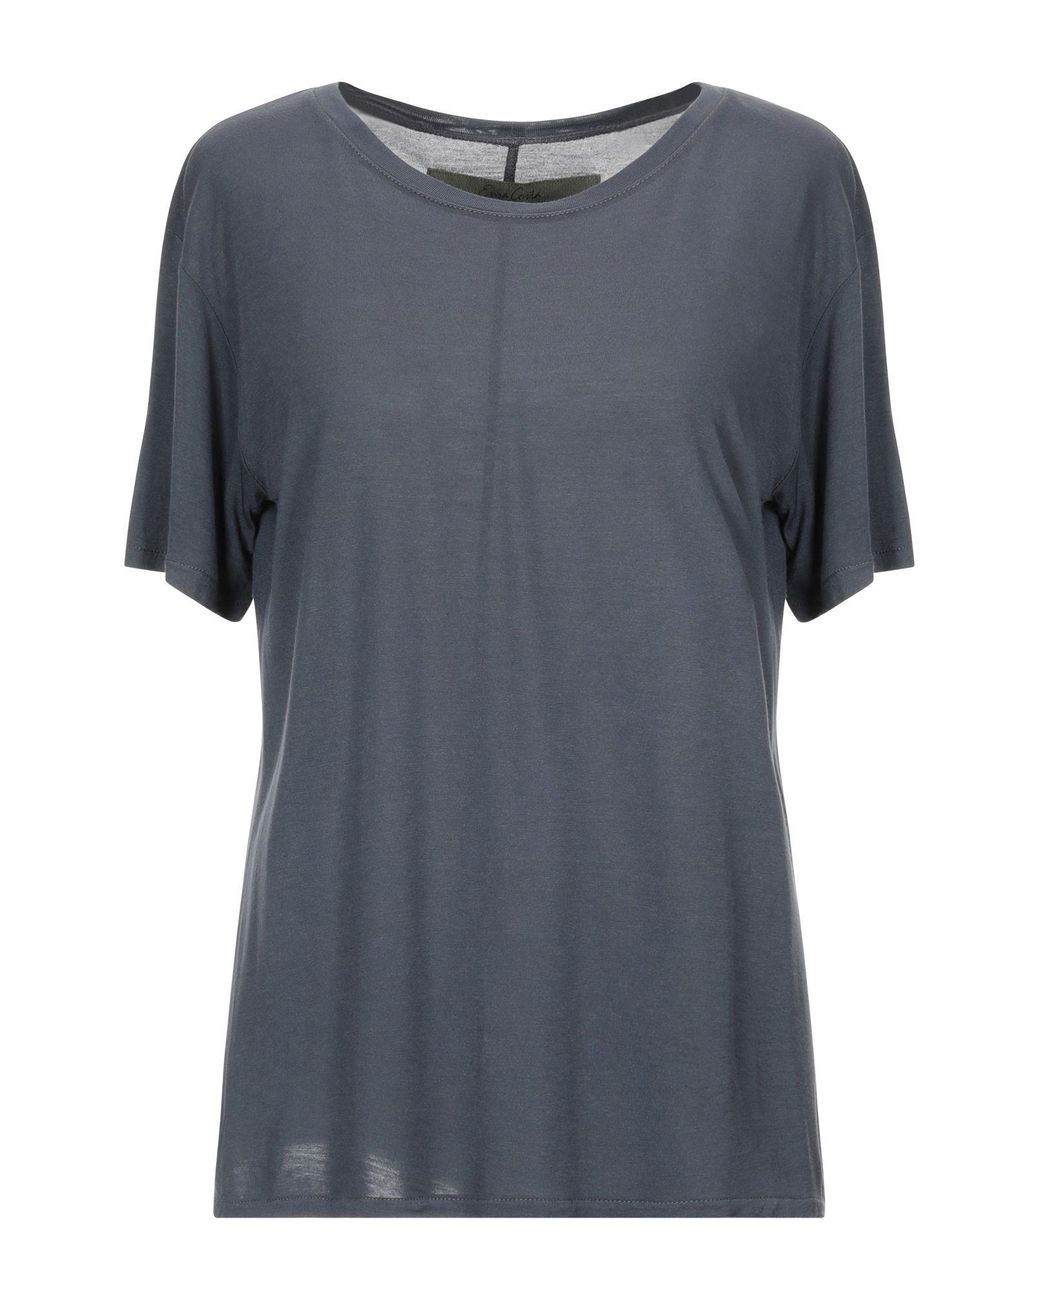 Enza Costa Silk T-shirt in Steel Grey (Gray) - Lyst